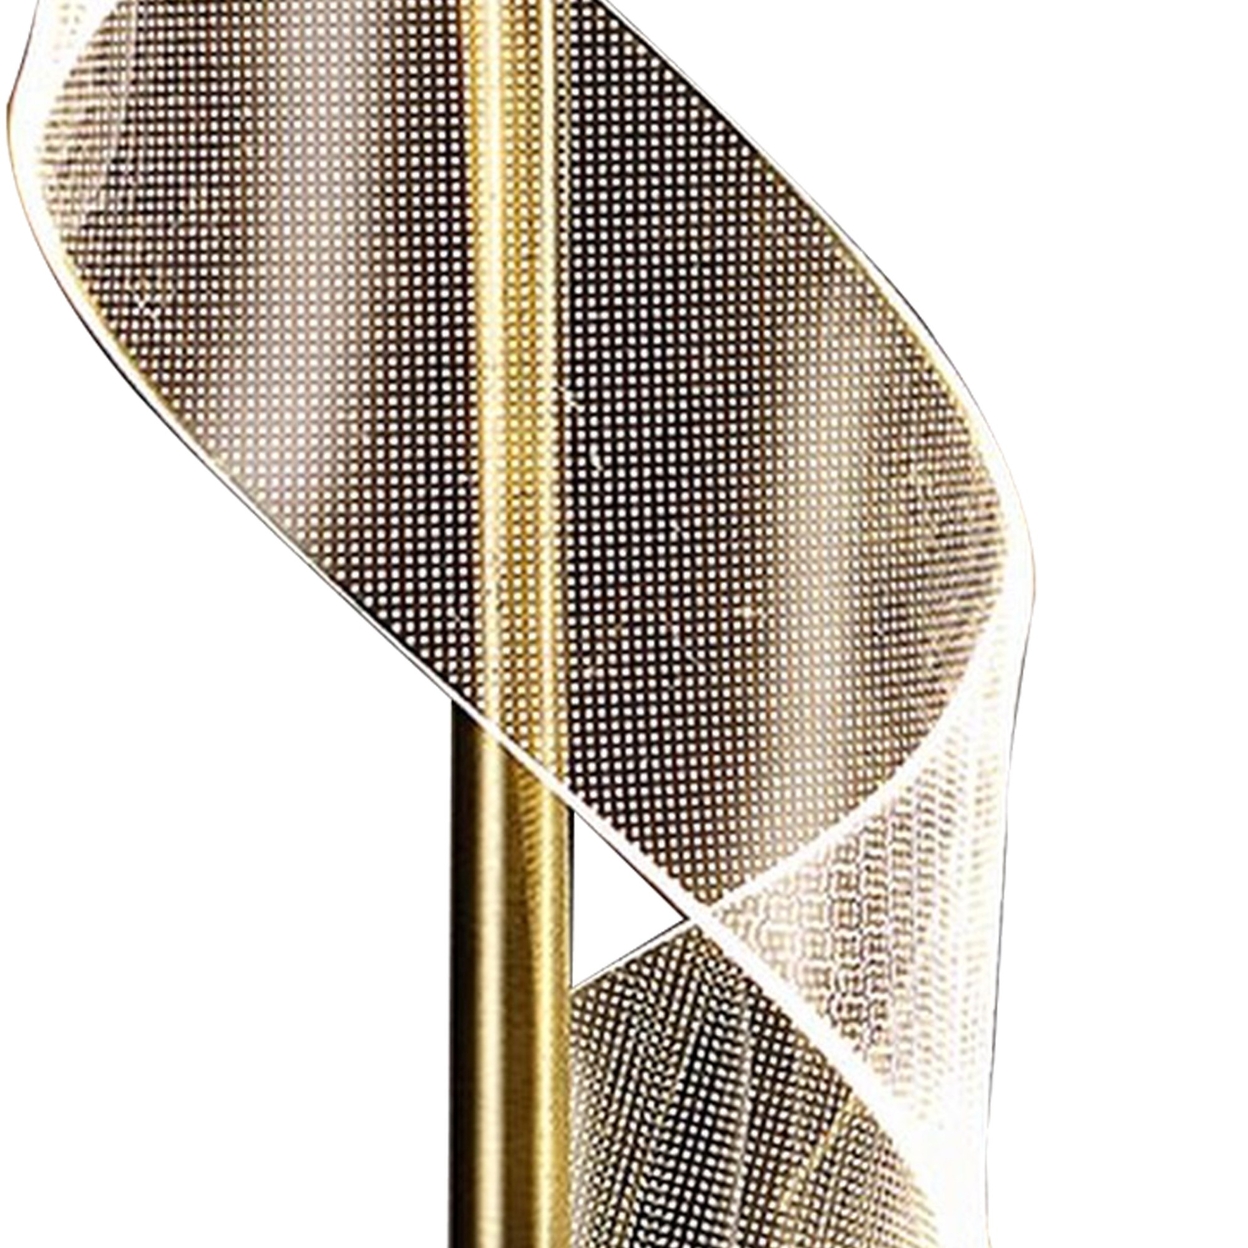 Melly 19 Inch Table Lamp, LED Swirl Ribbon Design, Acrylic, Antique Brass -Saltoro Sherpi